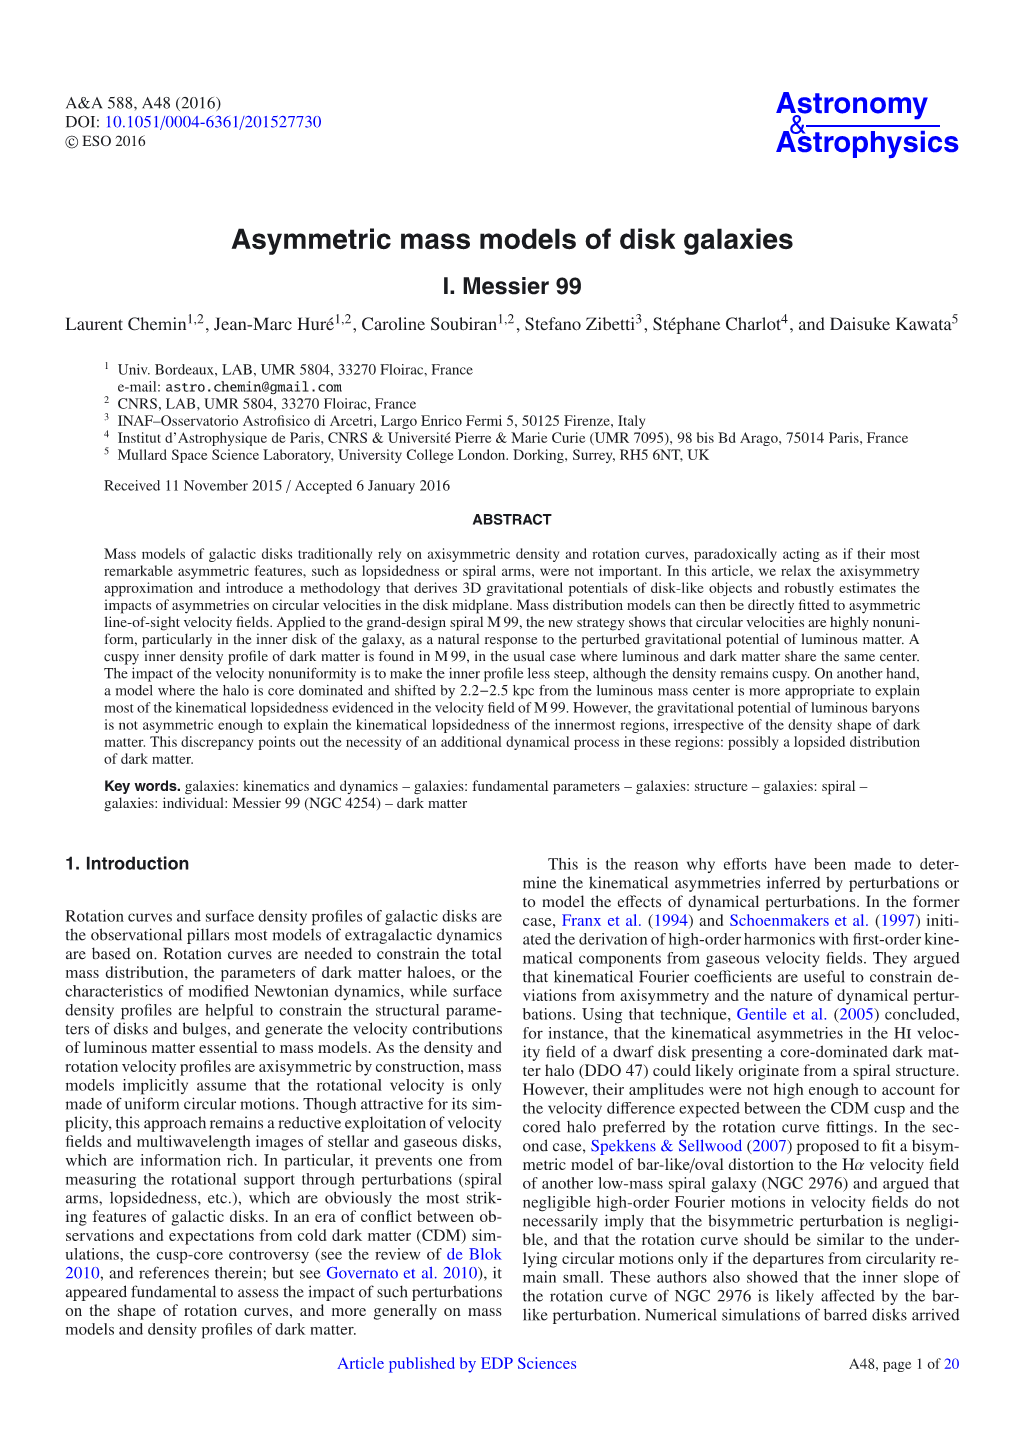 Asymmetric Mass Models of Disk Galaxies I